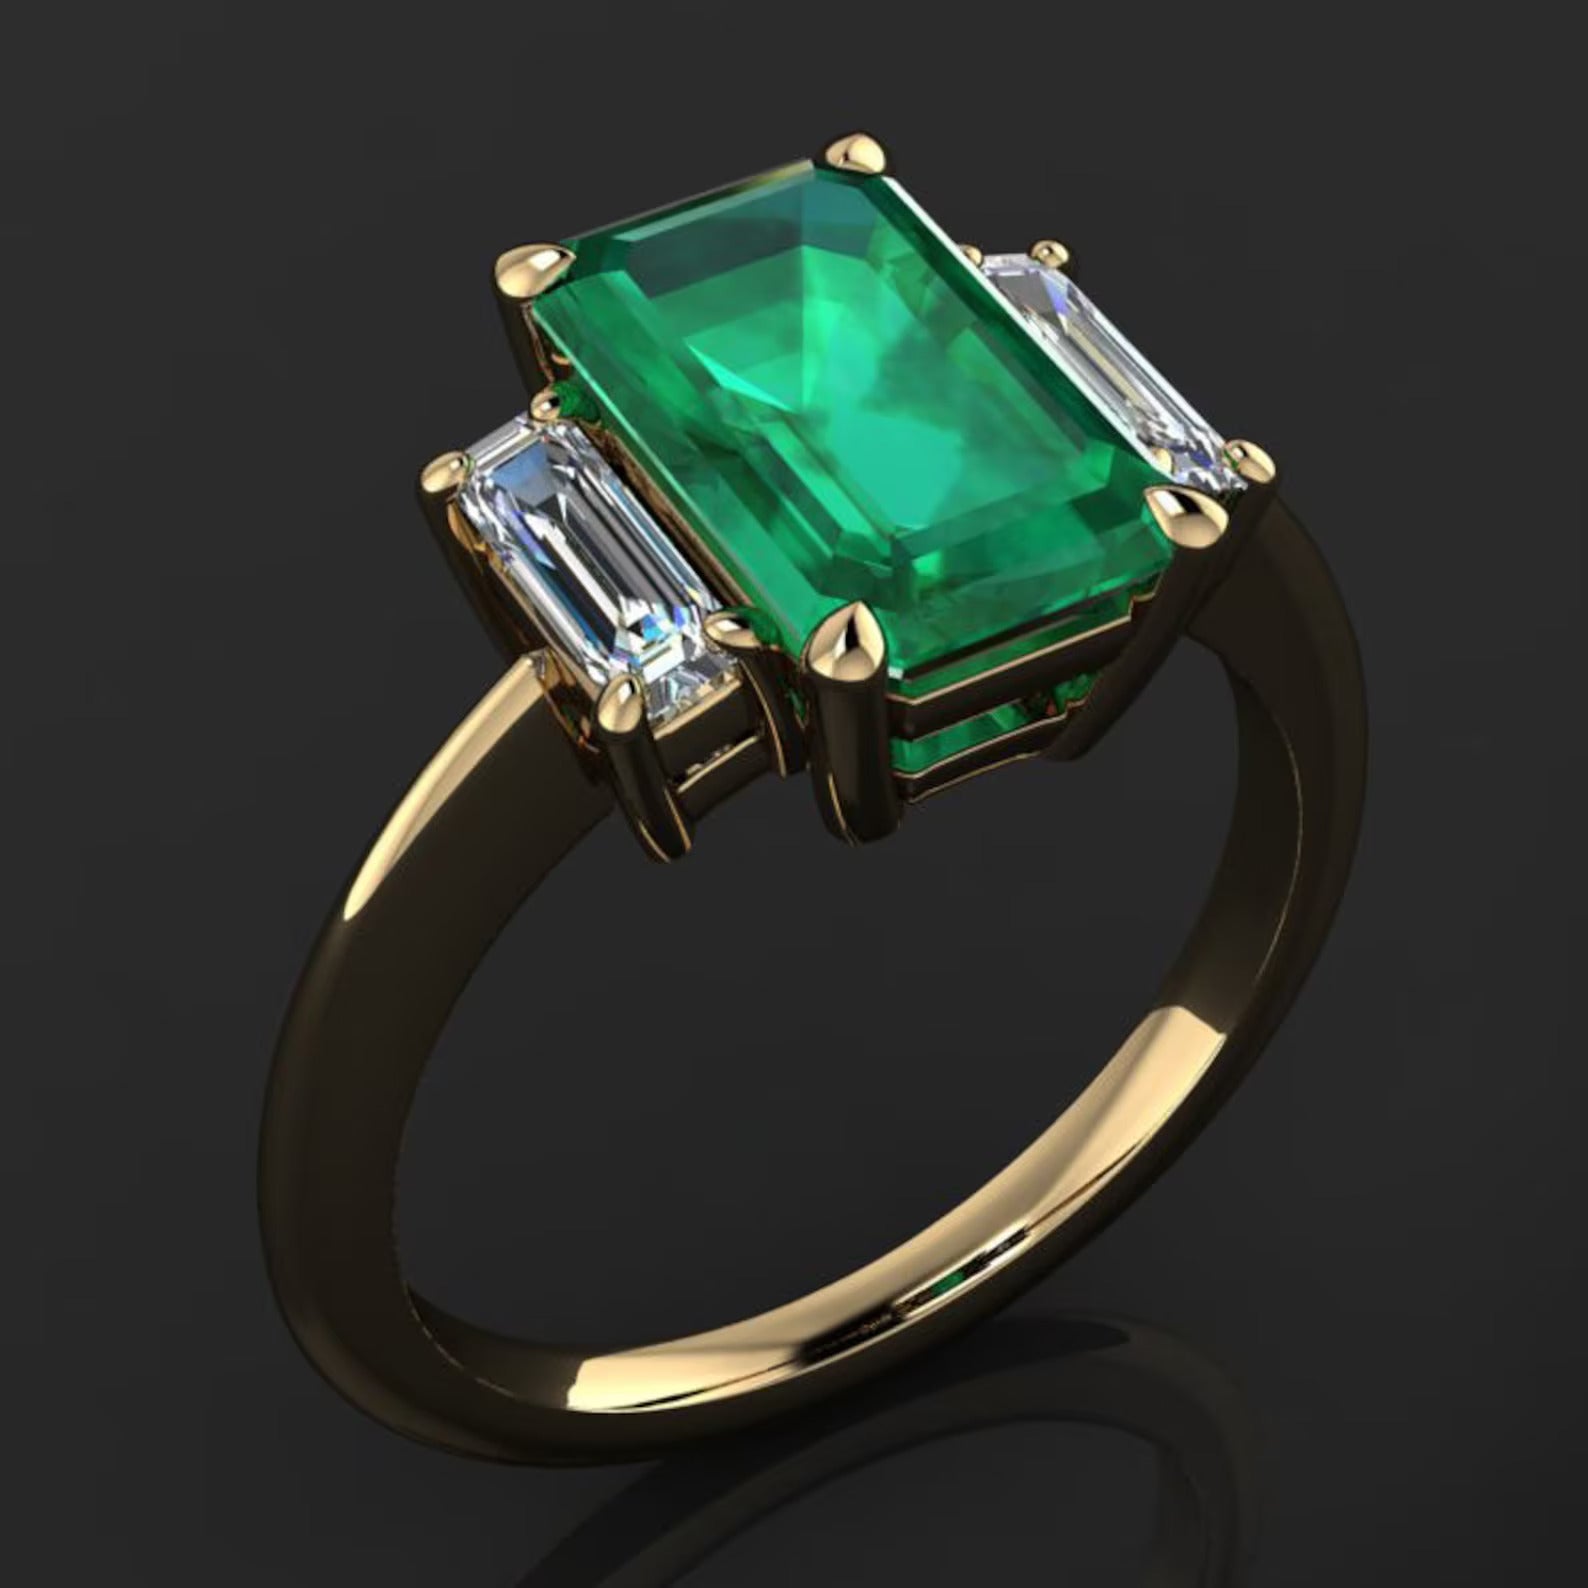 kennedy ring - 2.3 carat emerald cut ZAYA moissanite engagement ring, green moissanite ring - J Hollywood Designs